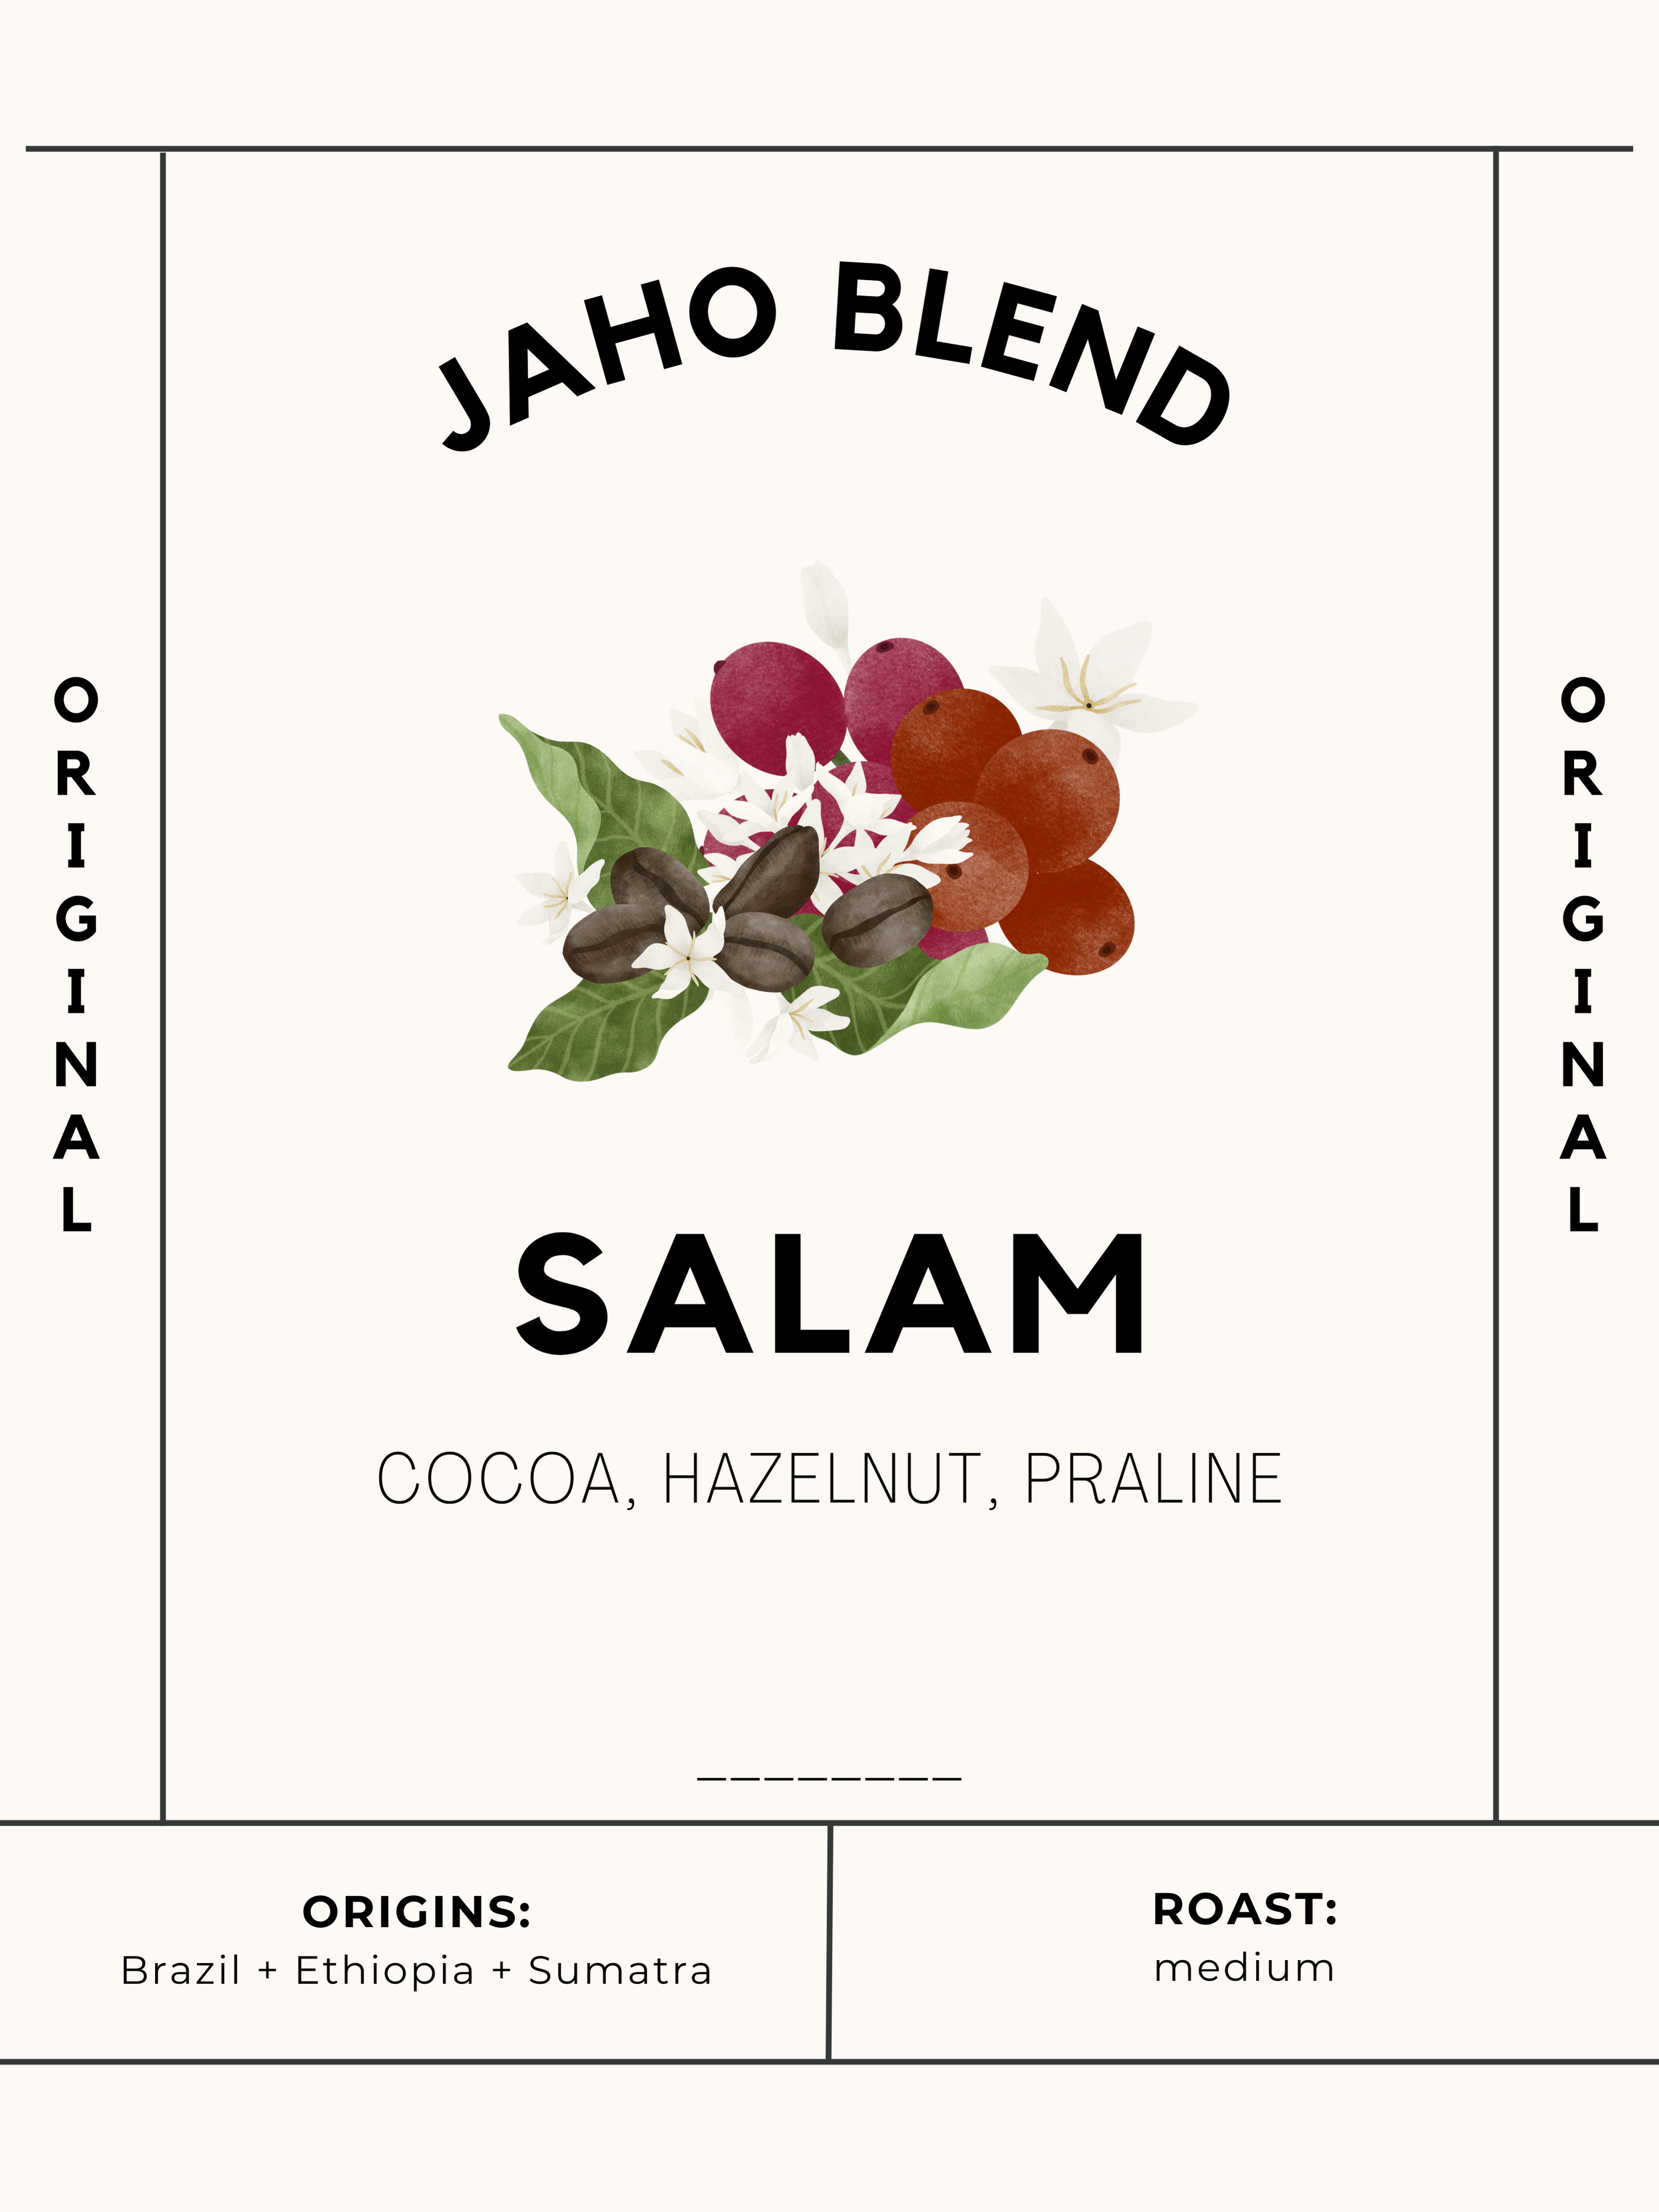 Salam House Blend - Jaho Coffee Roaster